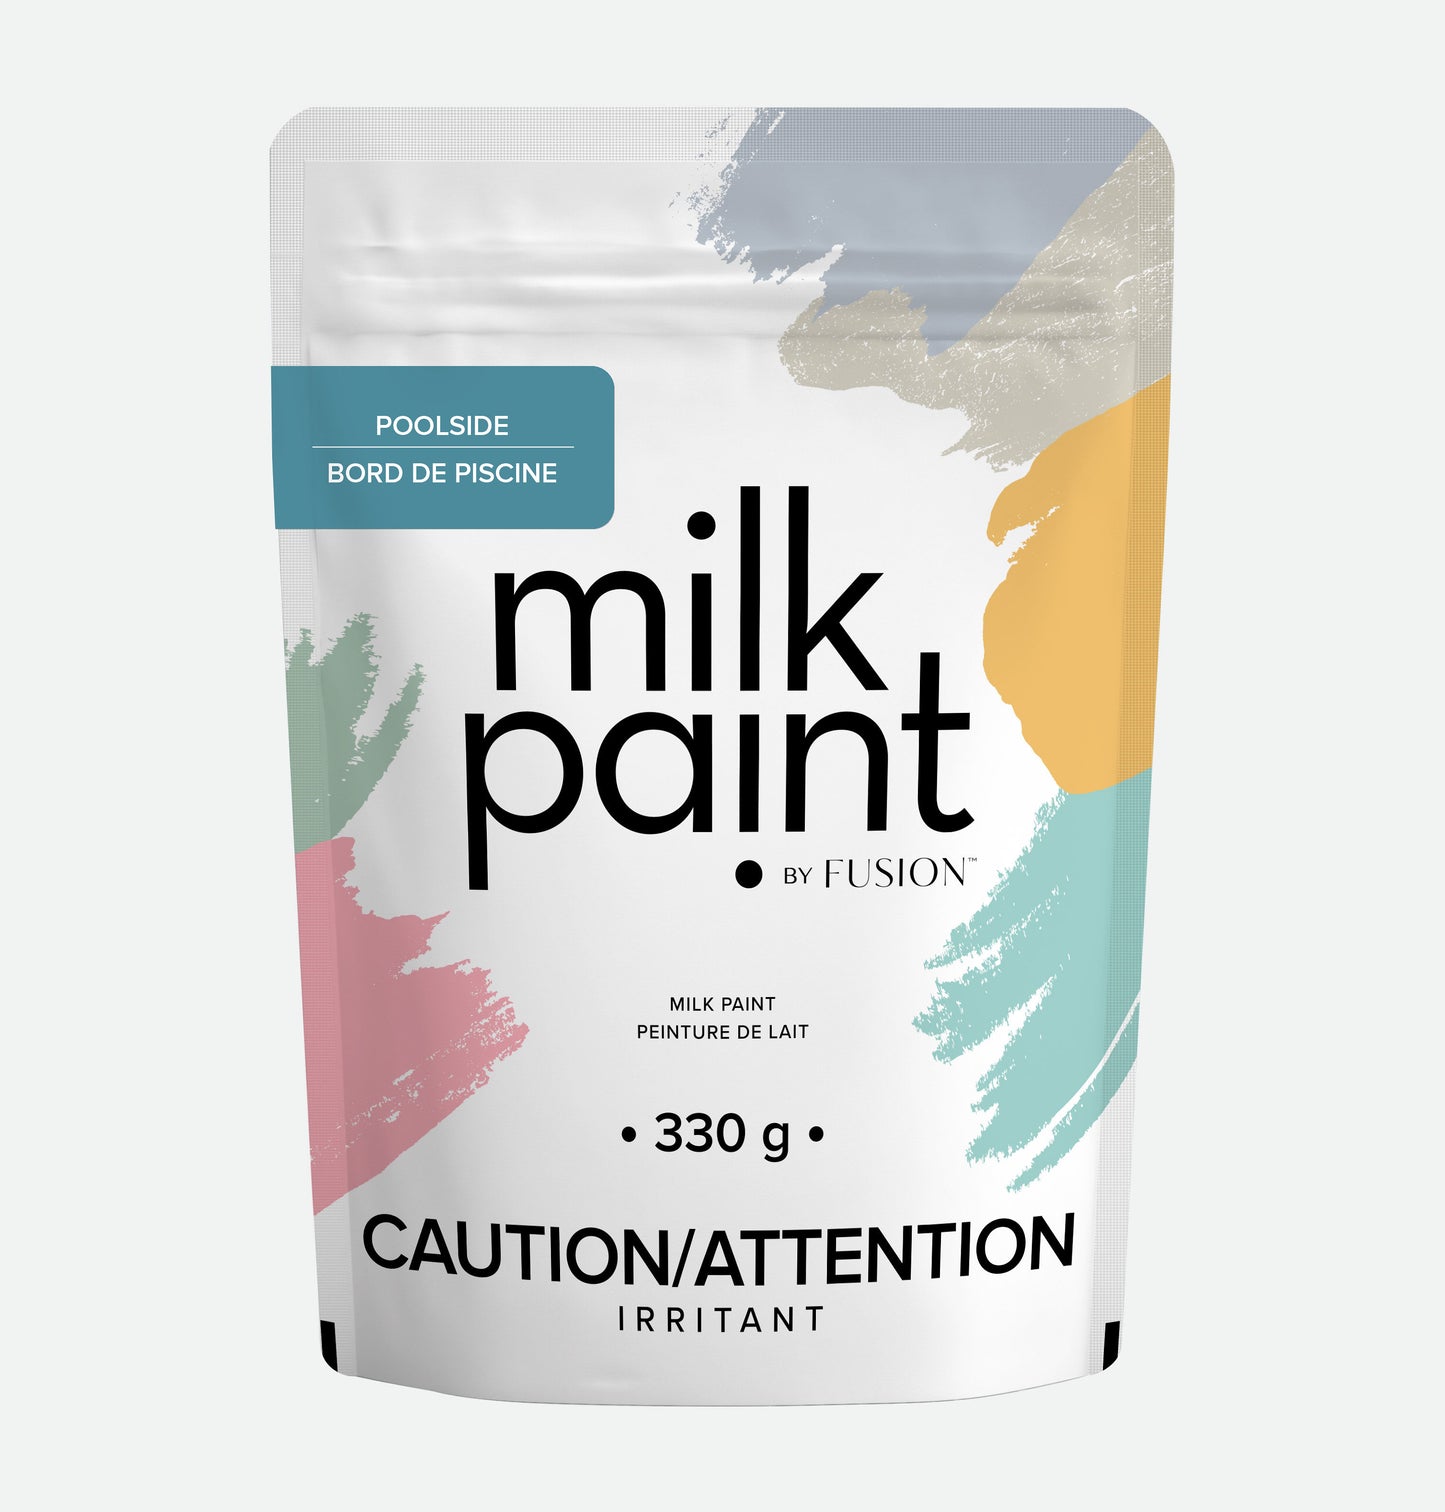 Fusion Milk Paint POOLSIDE